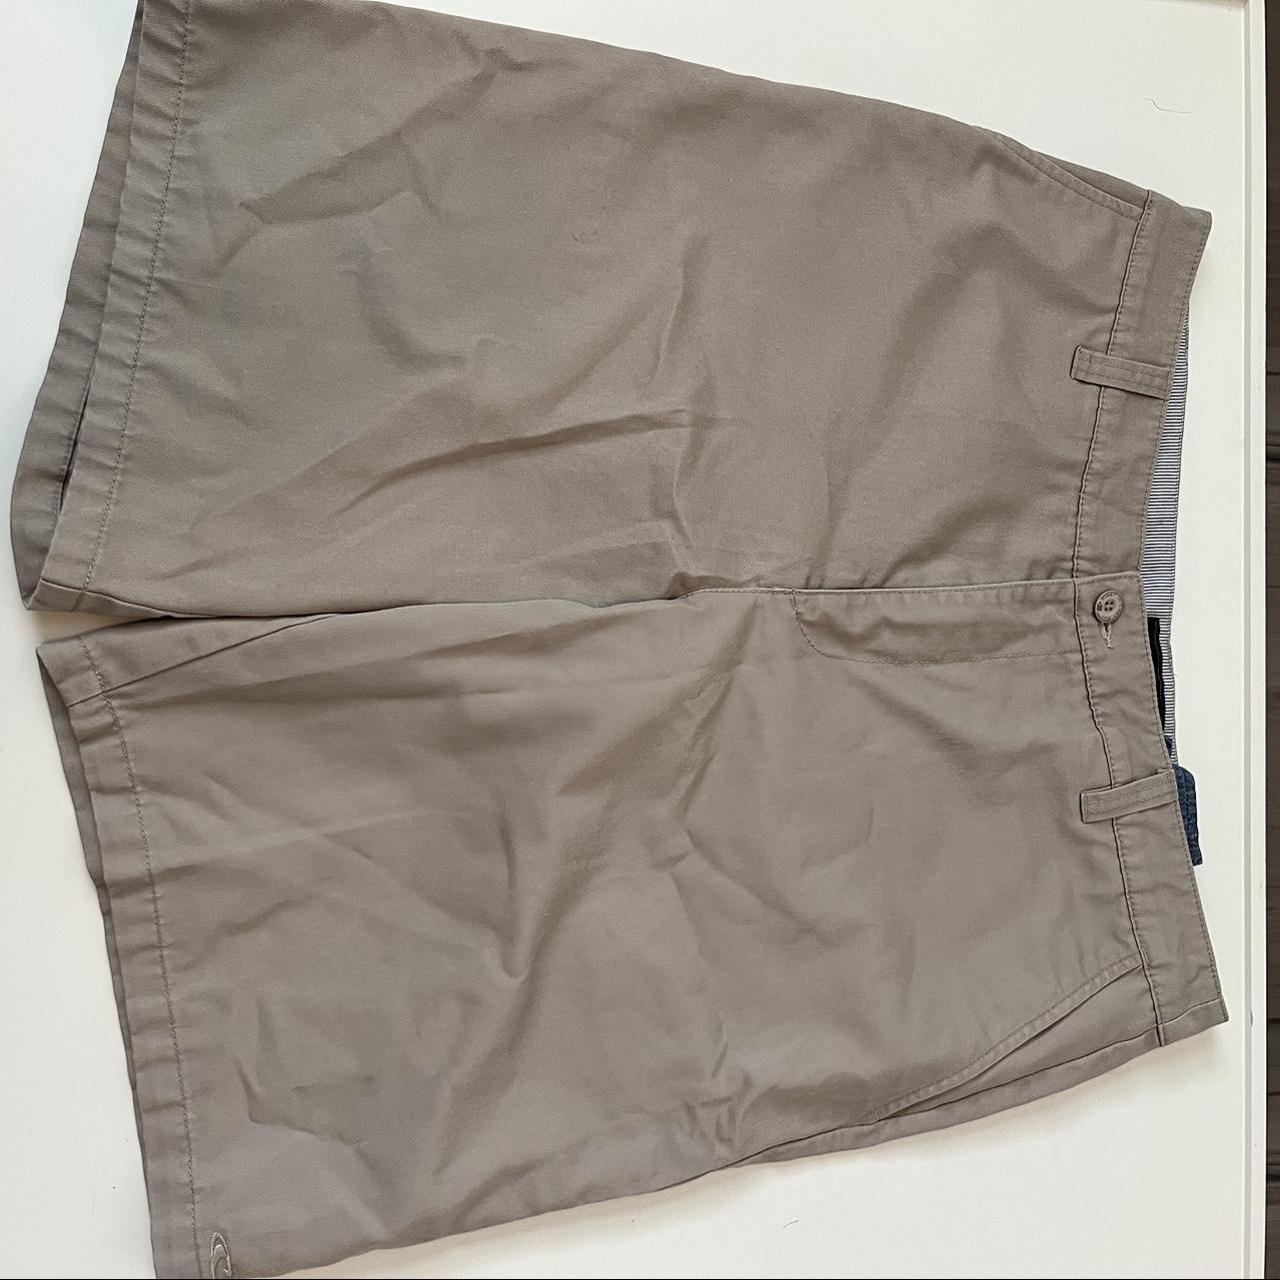 O’Neil khaki shorts size 34 - Depop